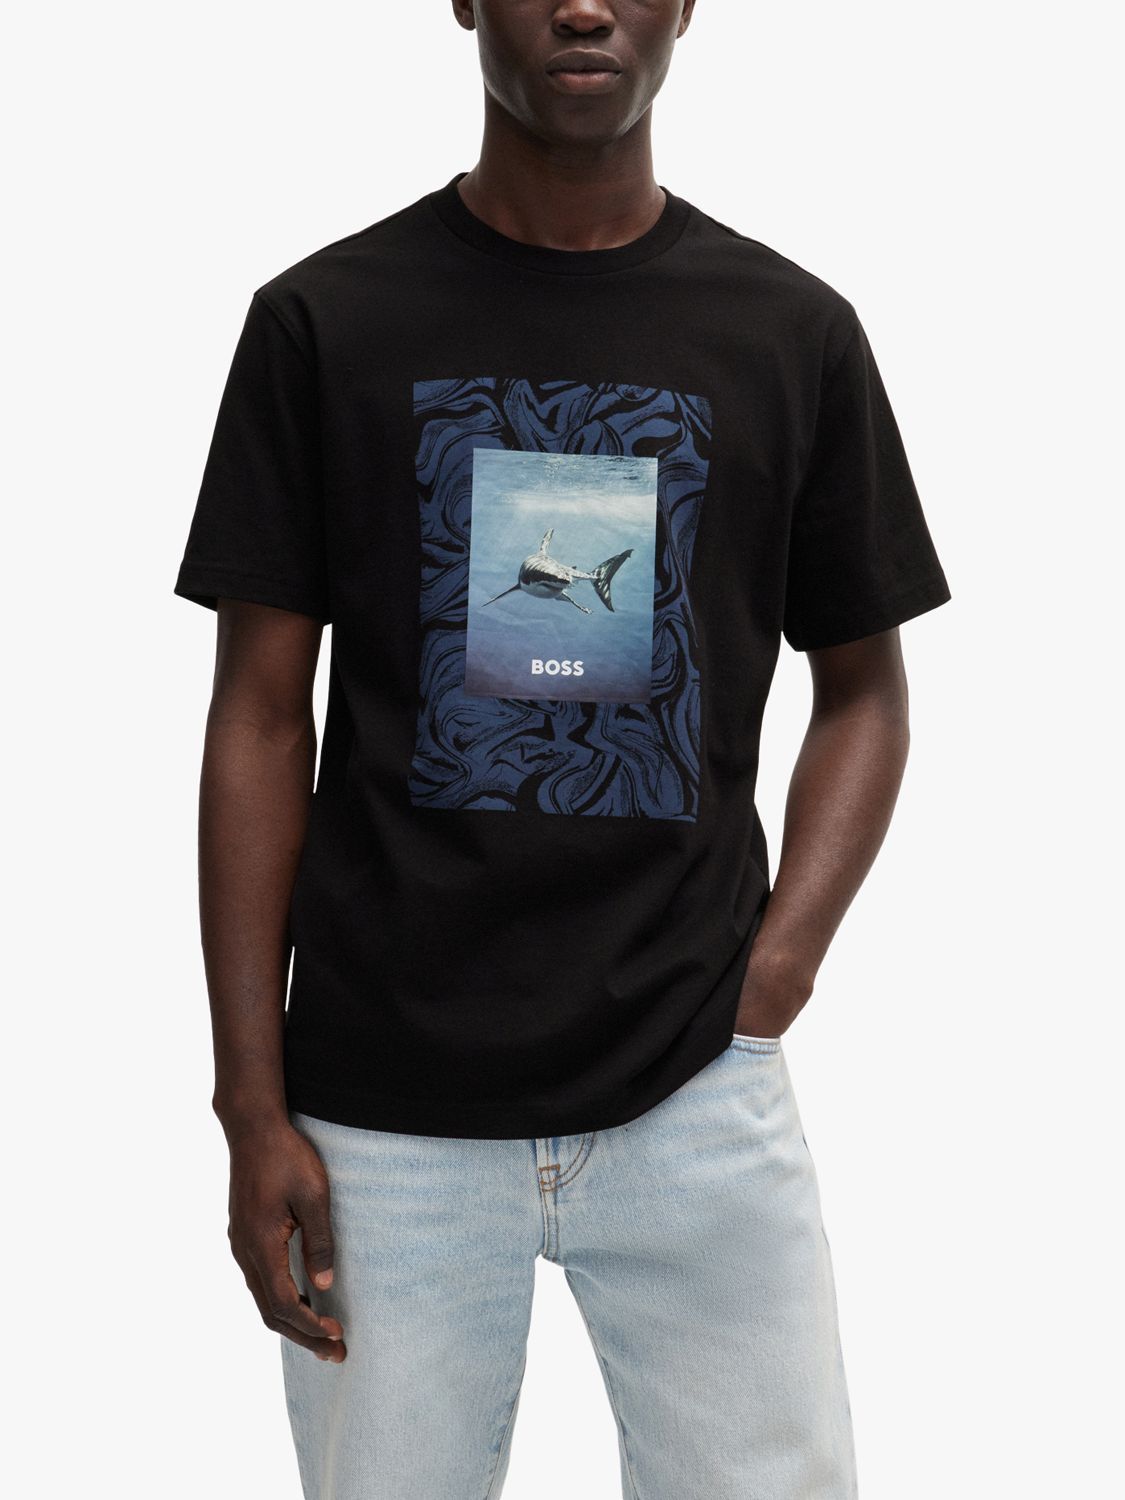 BOSS Tucan Graphic T-Shirt, Black, M